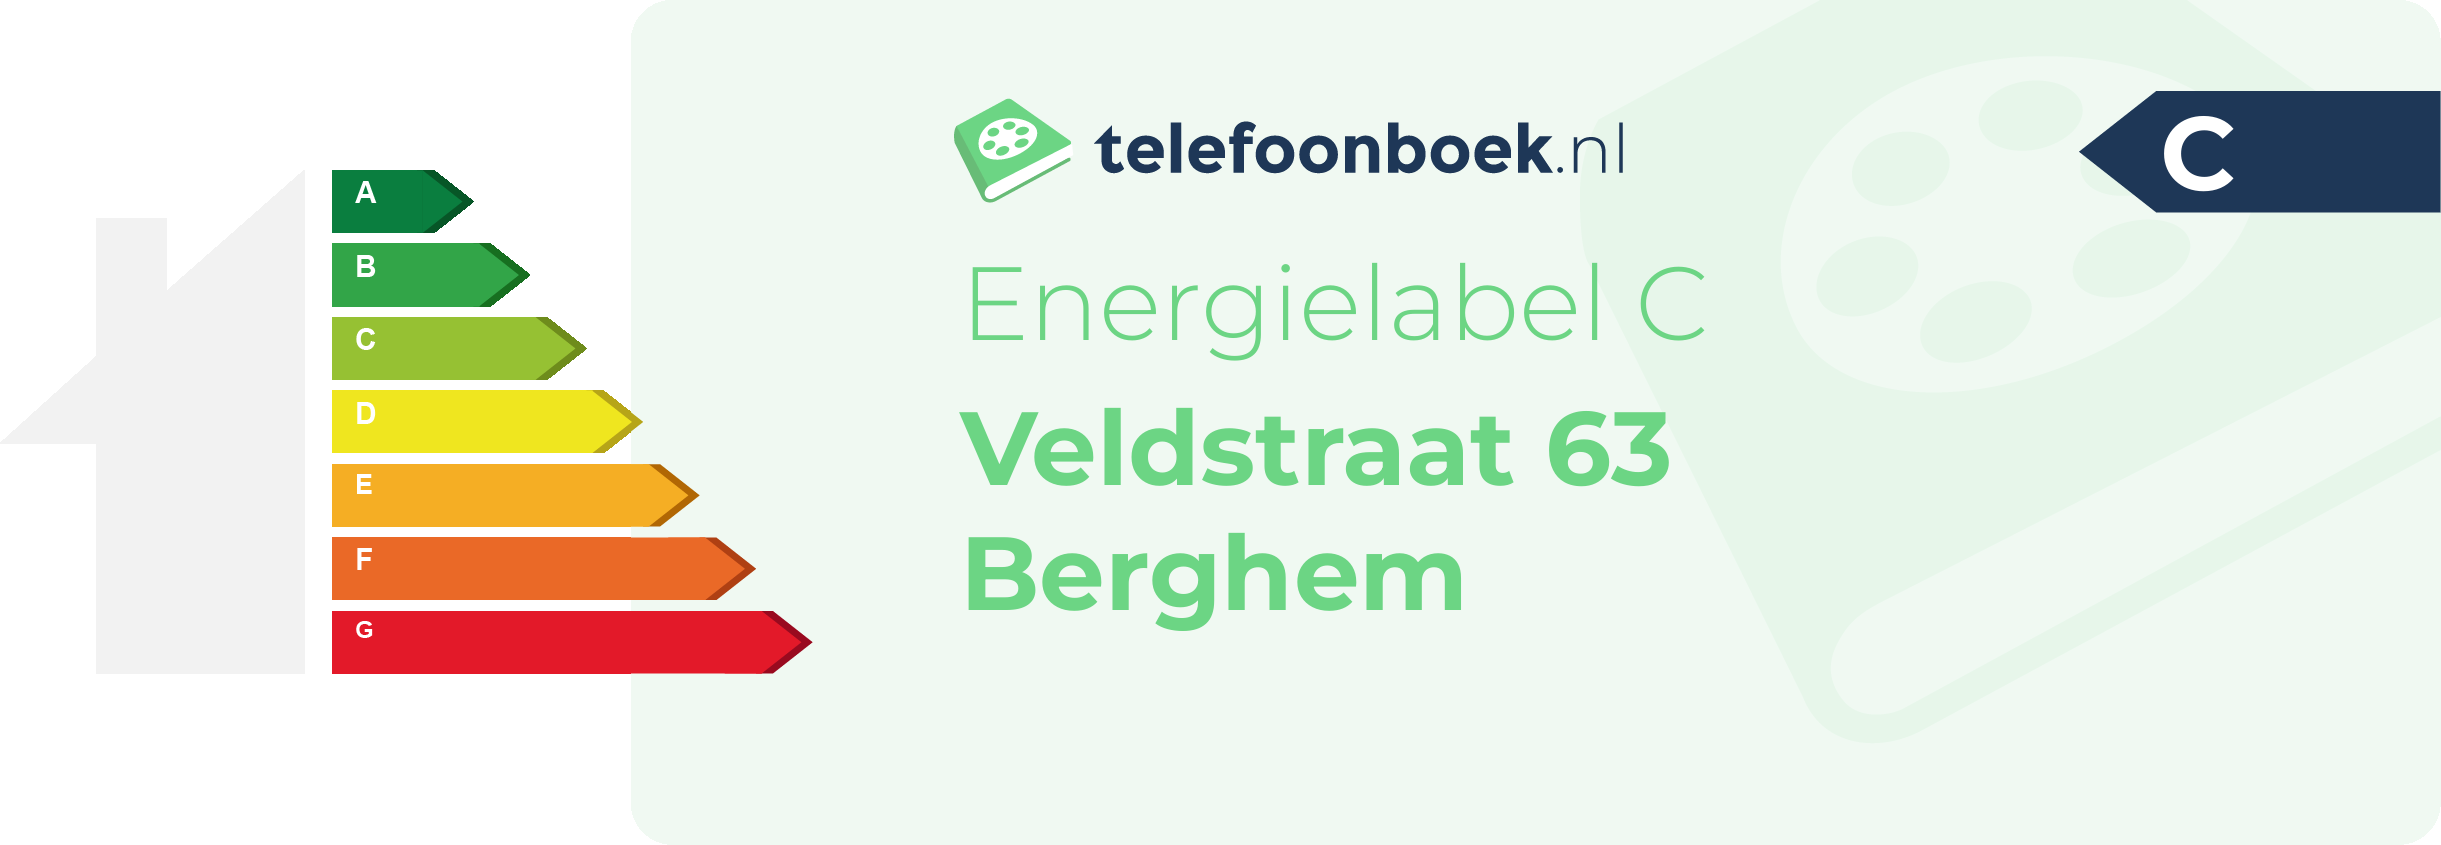 Energielabel Veldstraat 63 Berghem